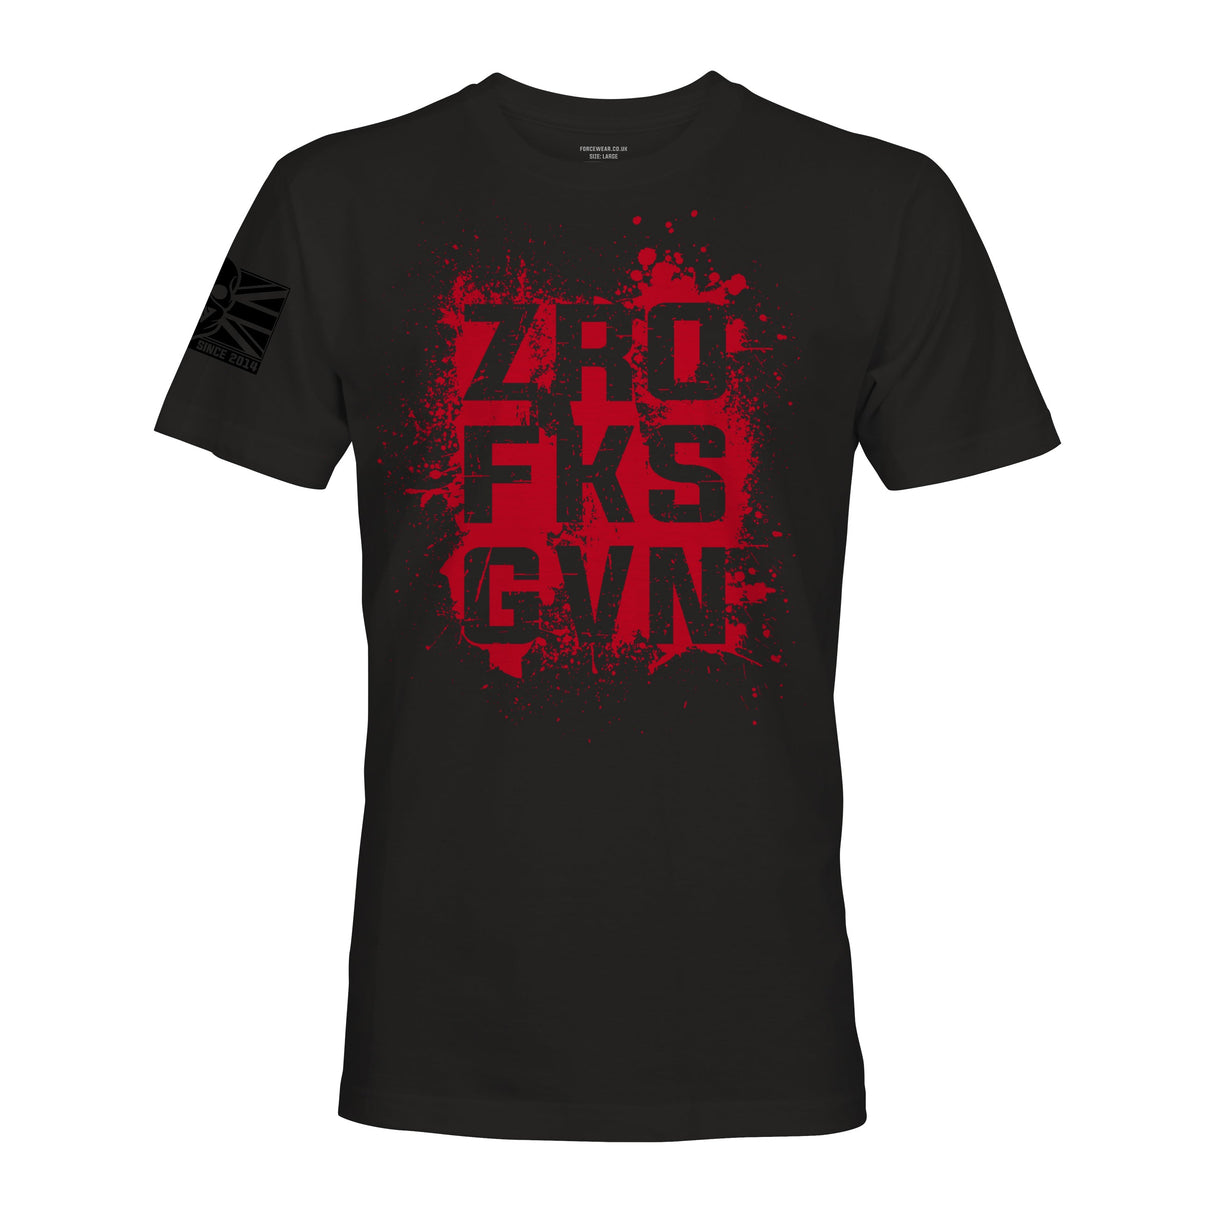 ZRO FKS GVN RED SPRAY - Force Wear HQ - T-SHIRTS